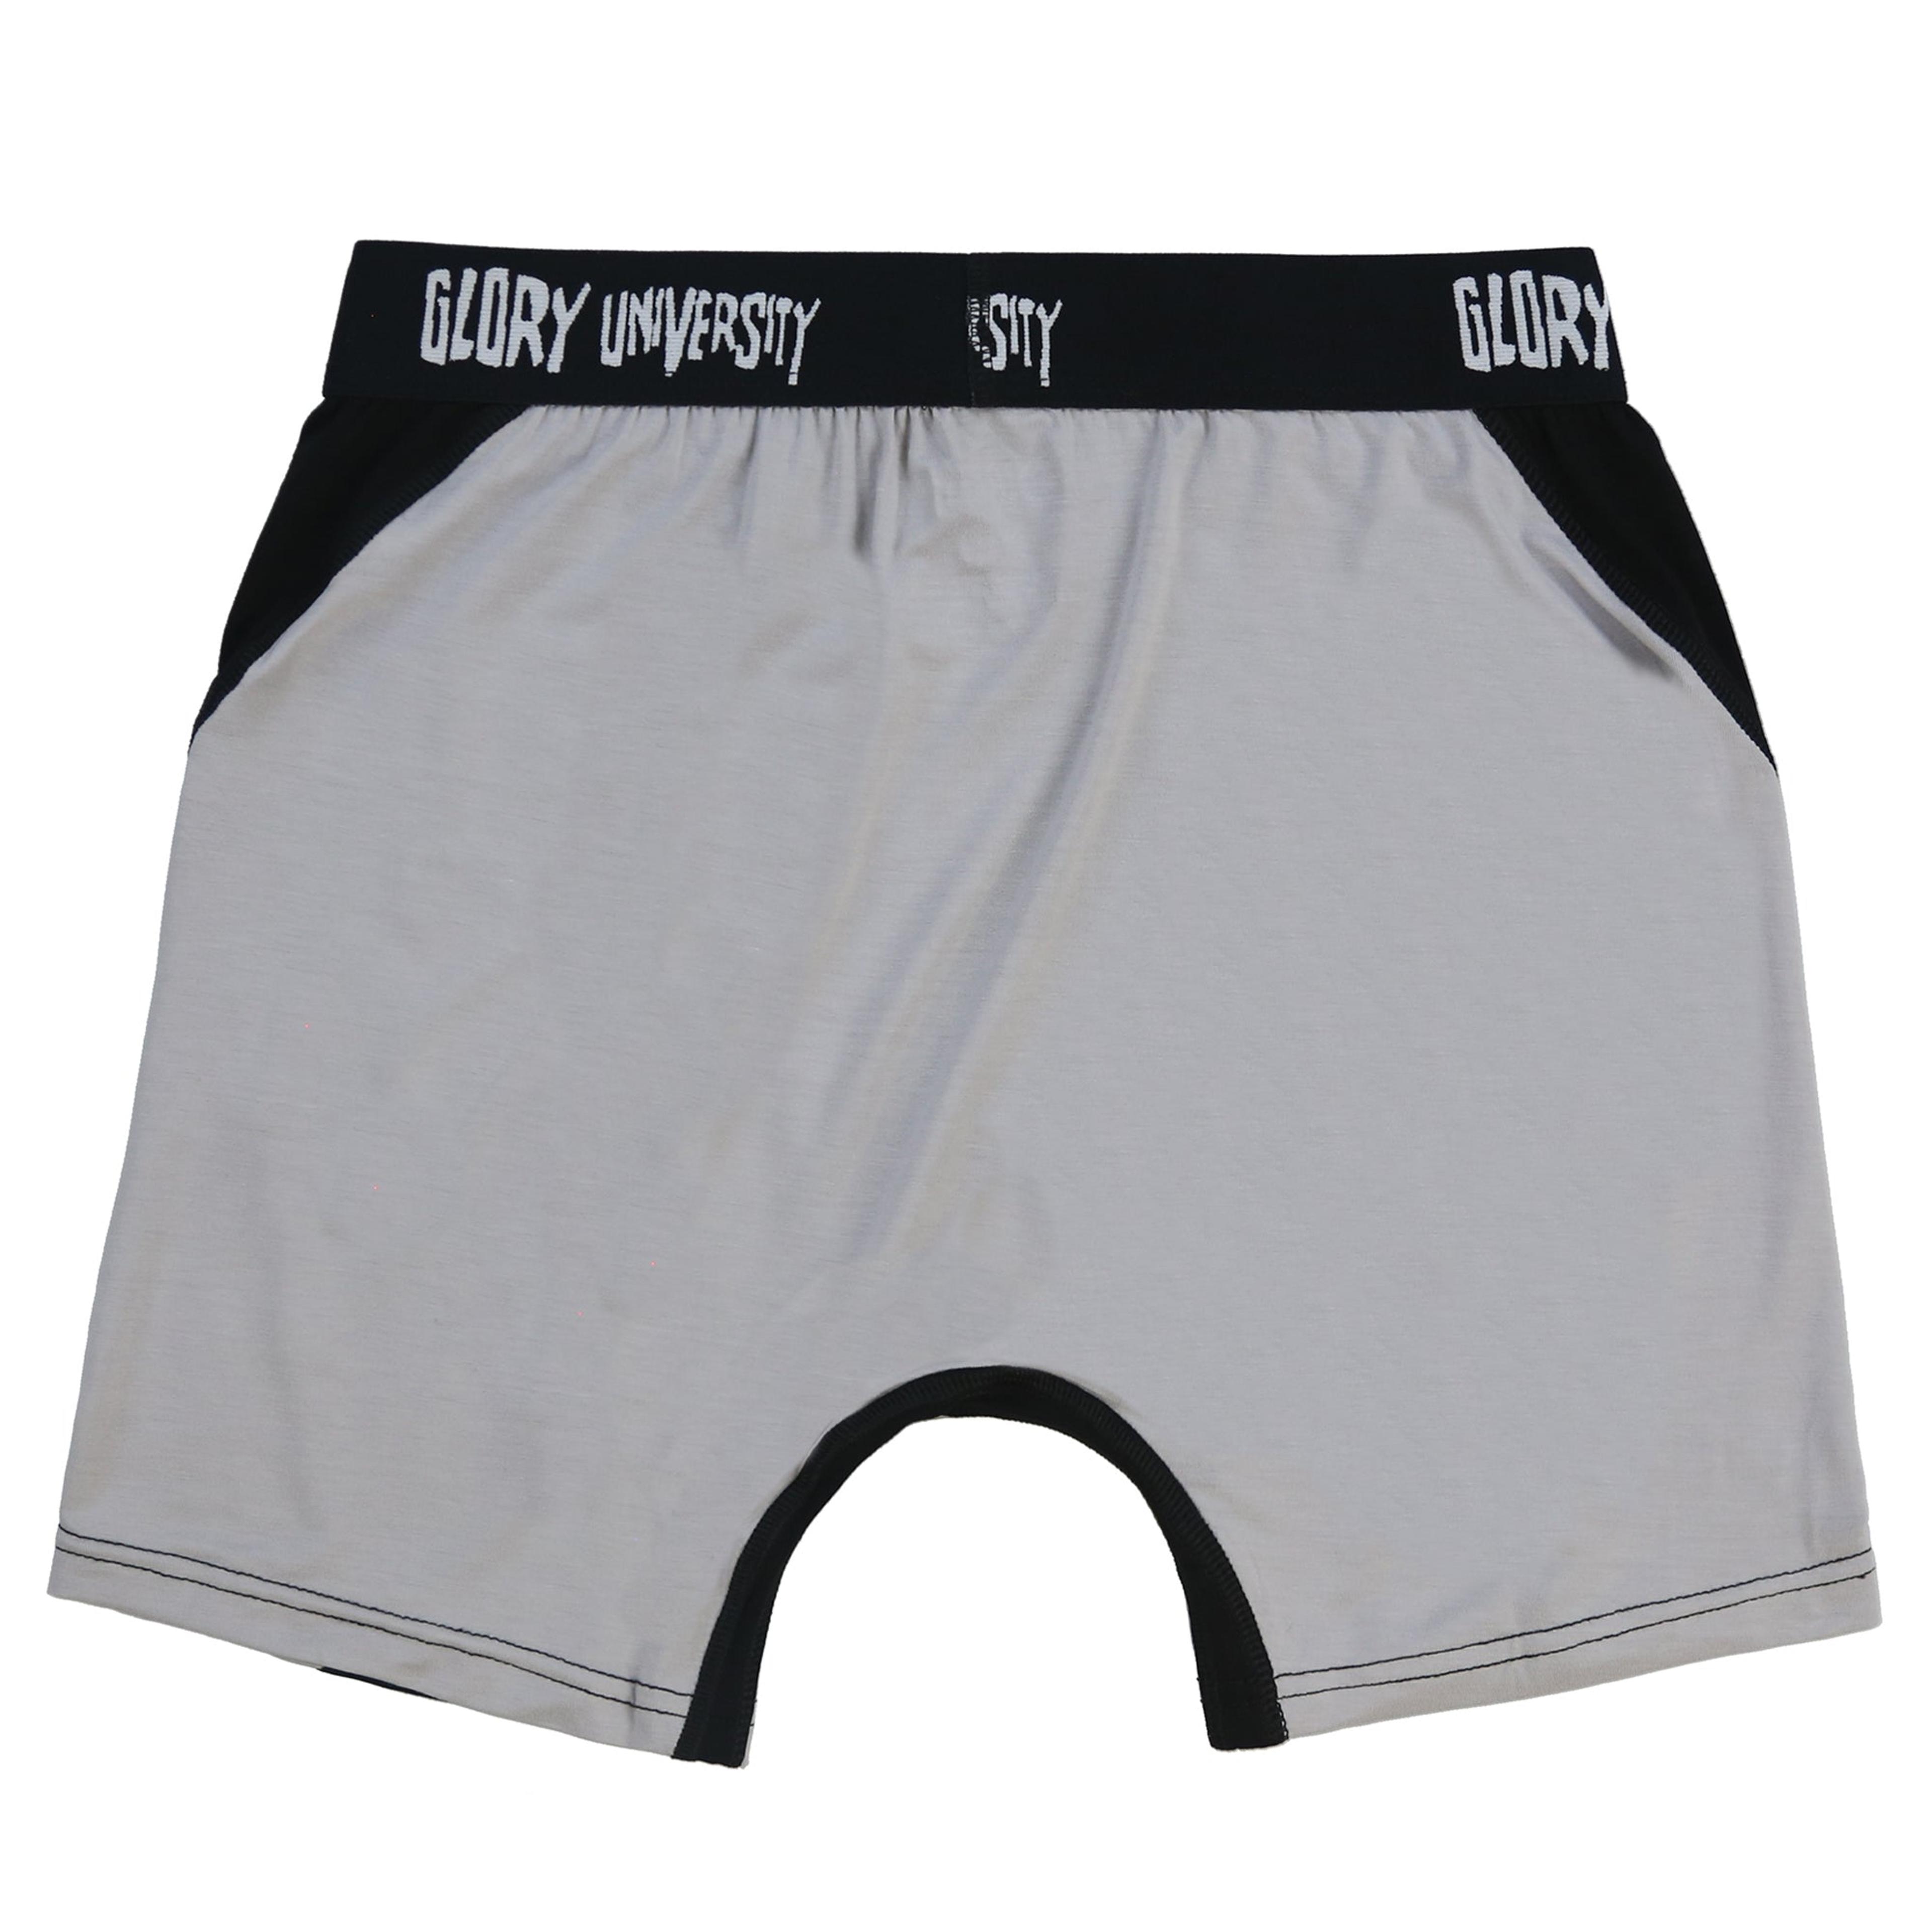 Alternate View 1 of Glory University Boxers (Grey/Black)